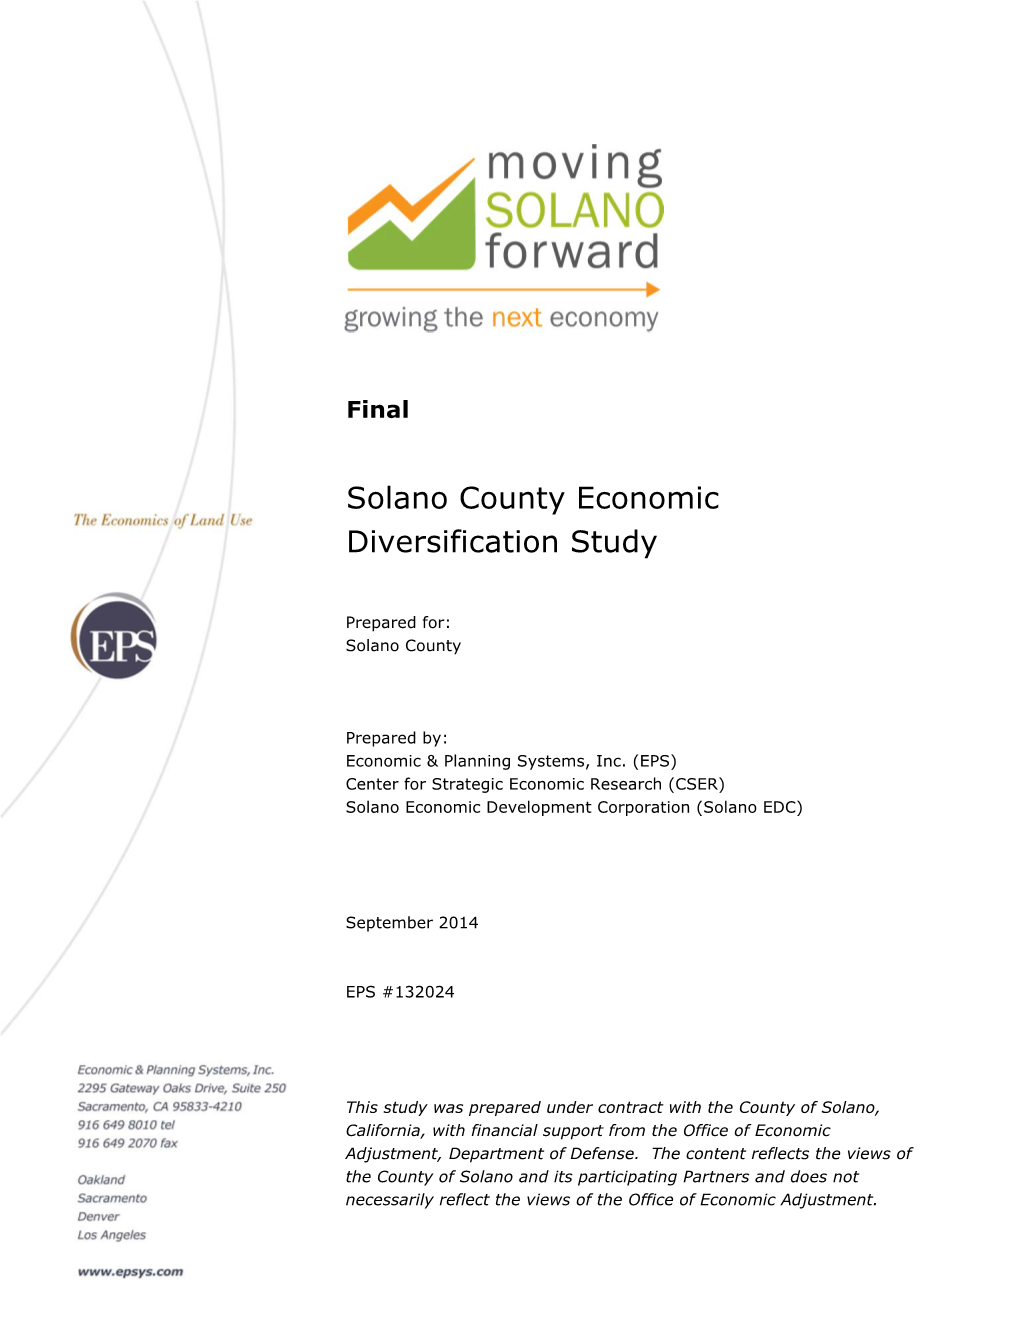 Solano County Economic Diversification Study